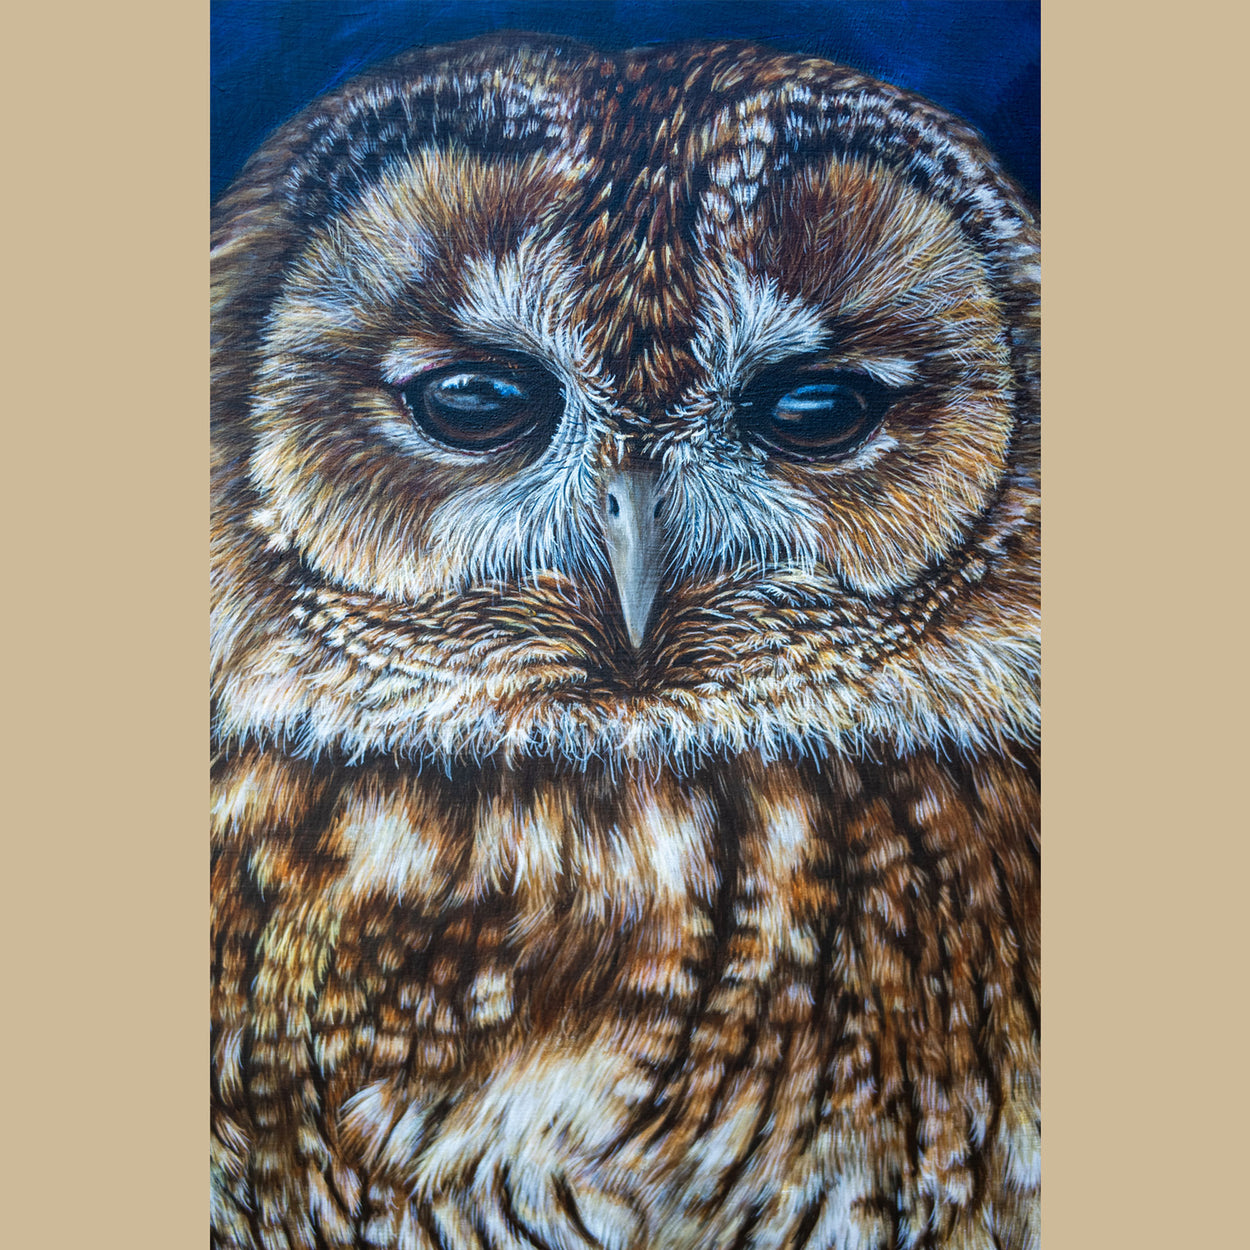 Tawny Owl Painting Close-up 1 - Jill Dimond TheThrivingWild